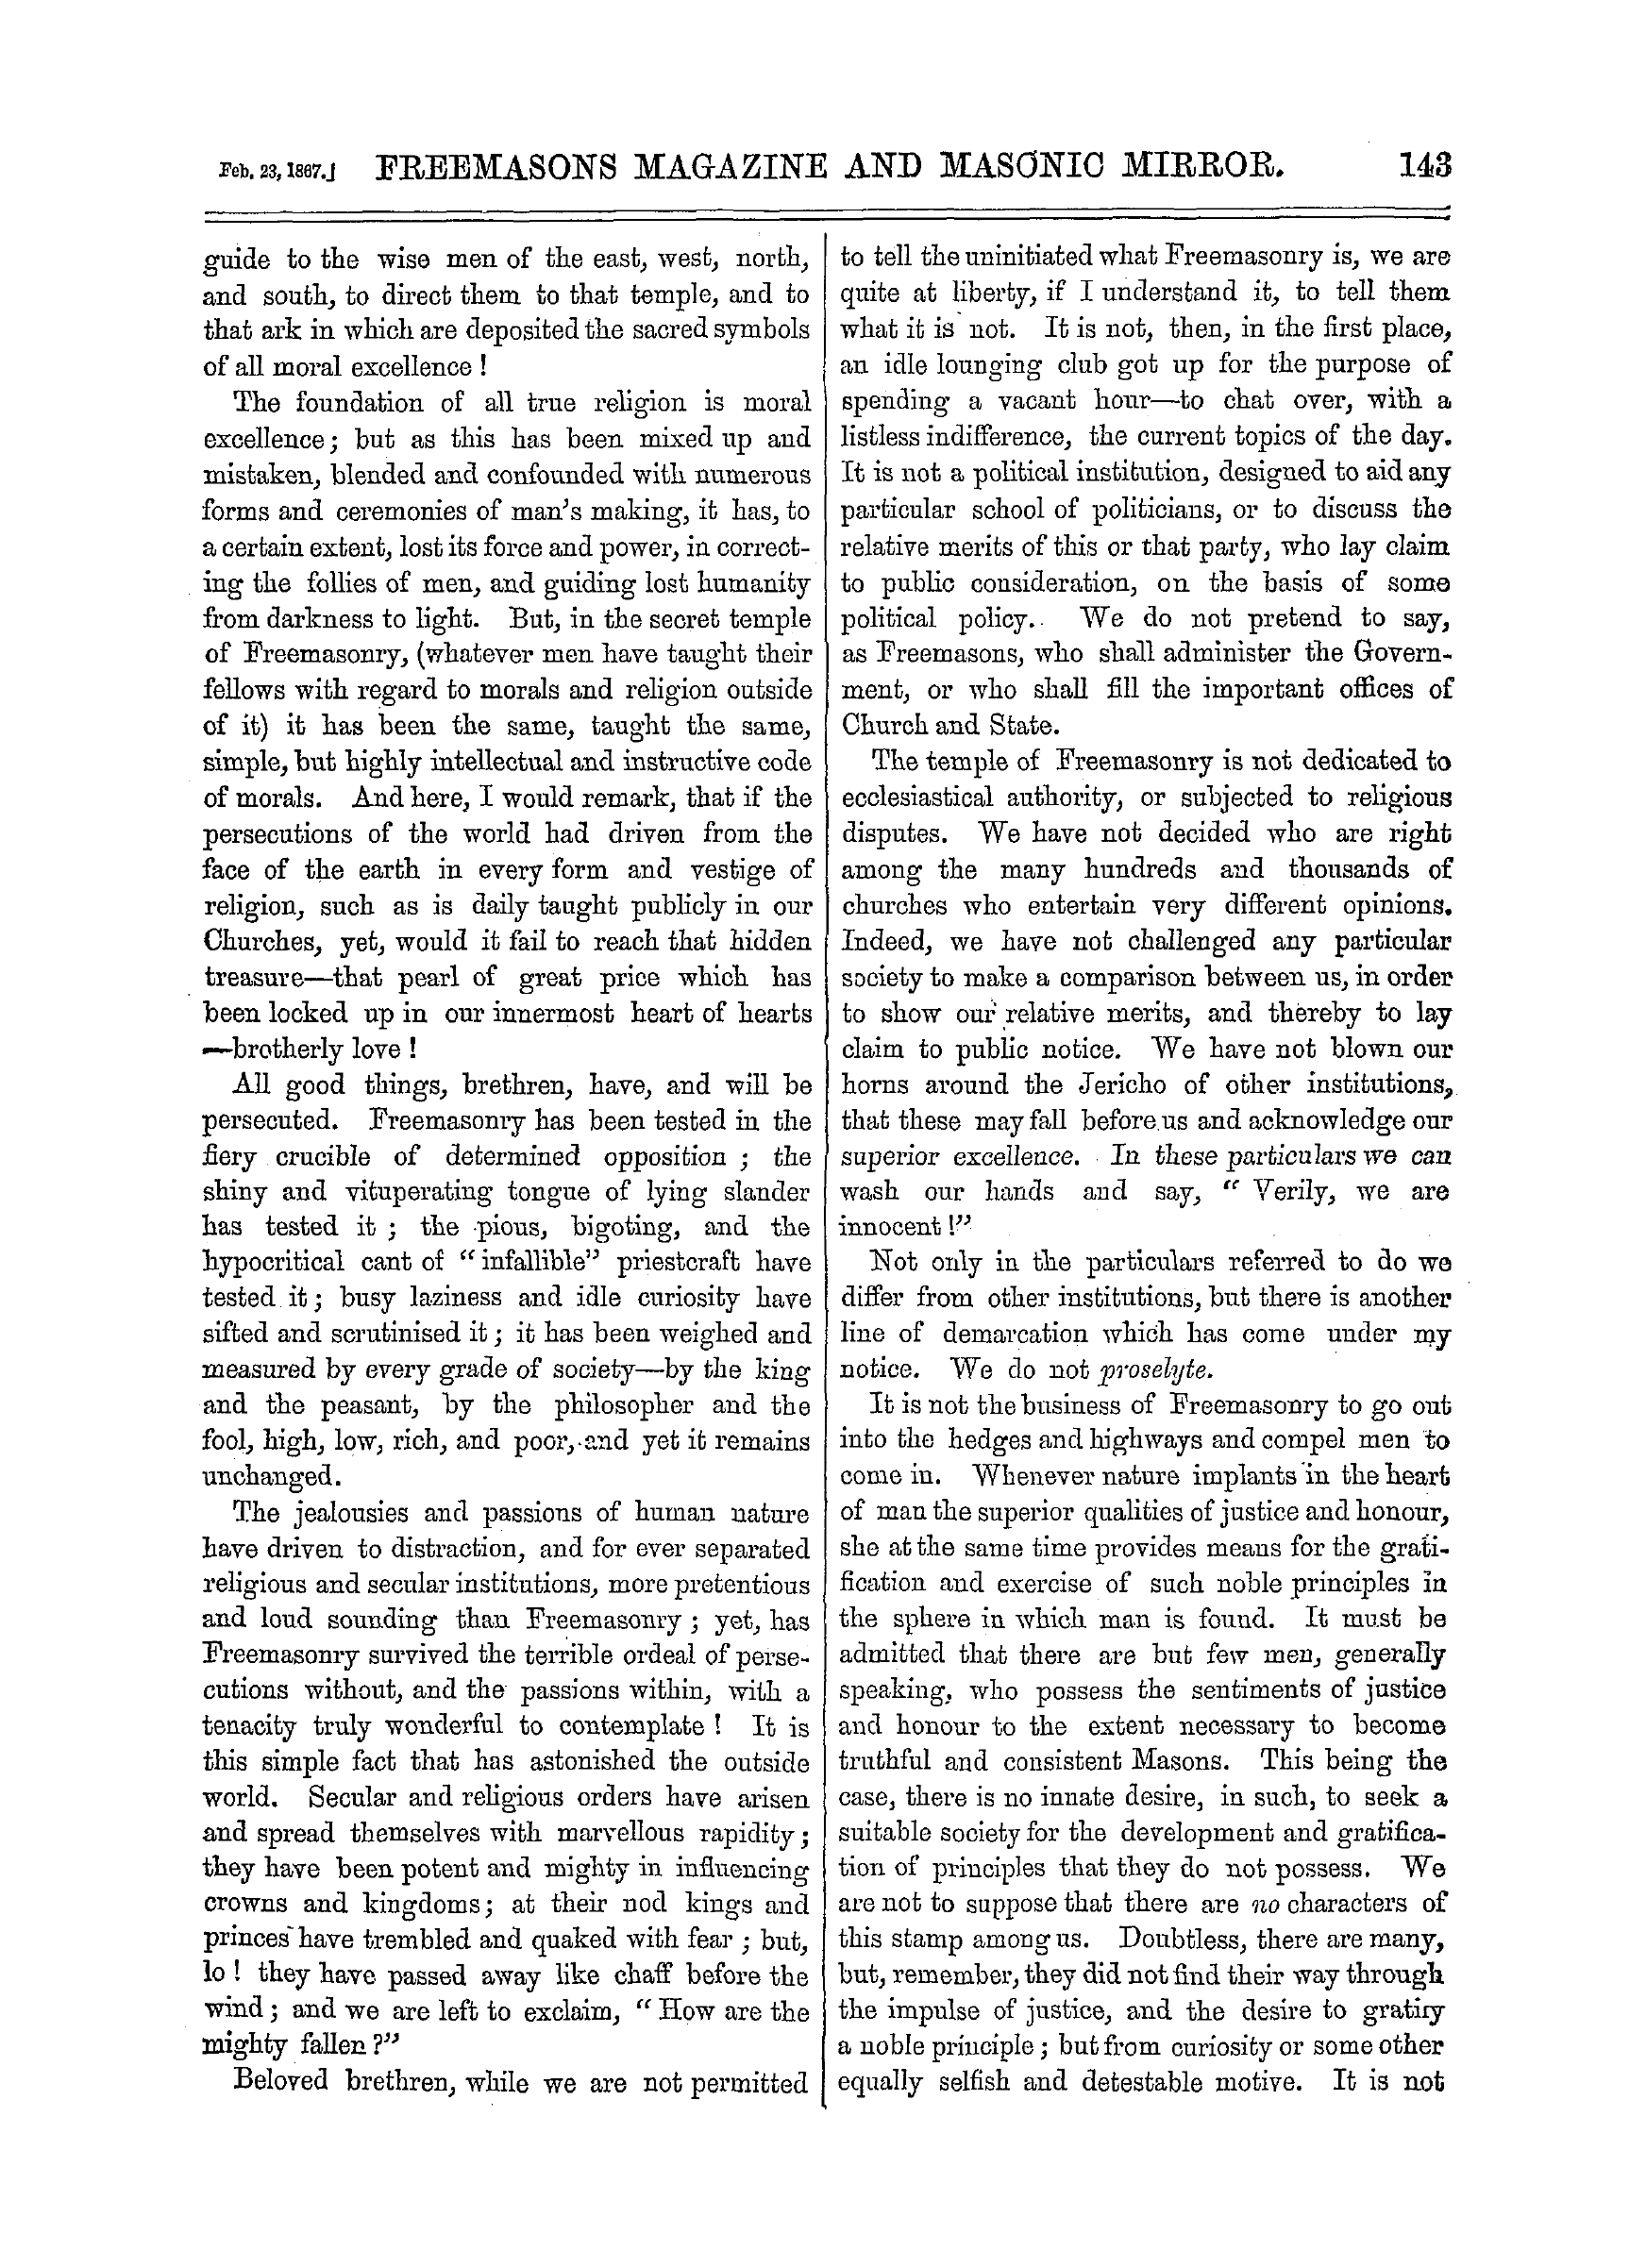 The Freemasons' Monthly Magazine: 1867-02-23 - Freemasonry.